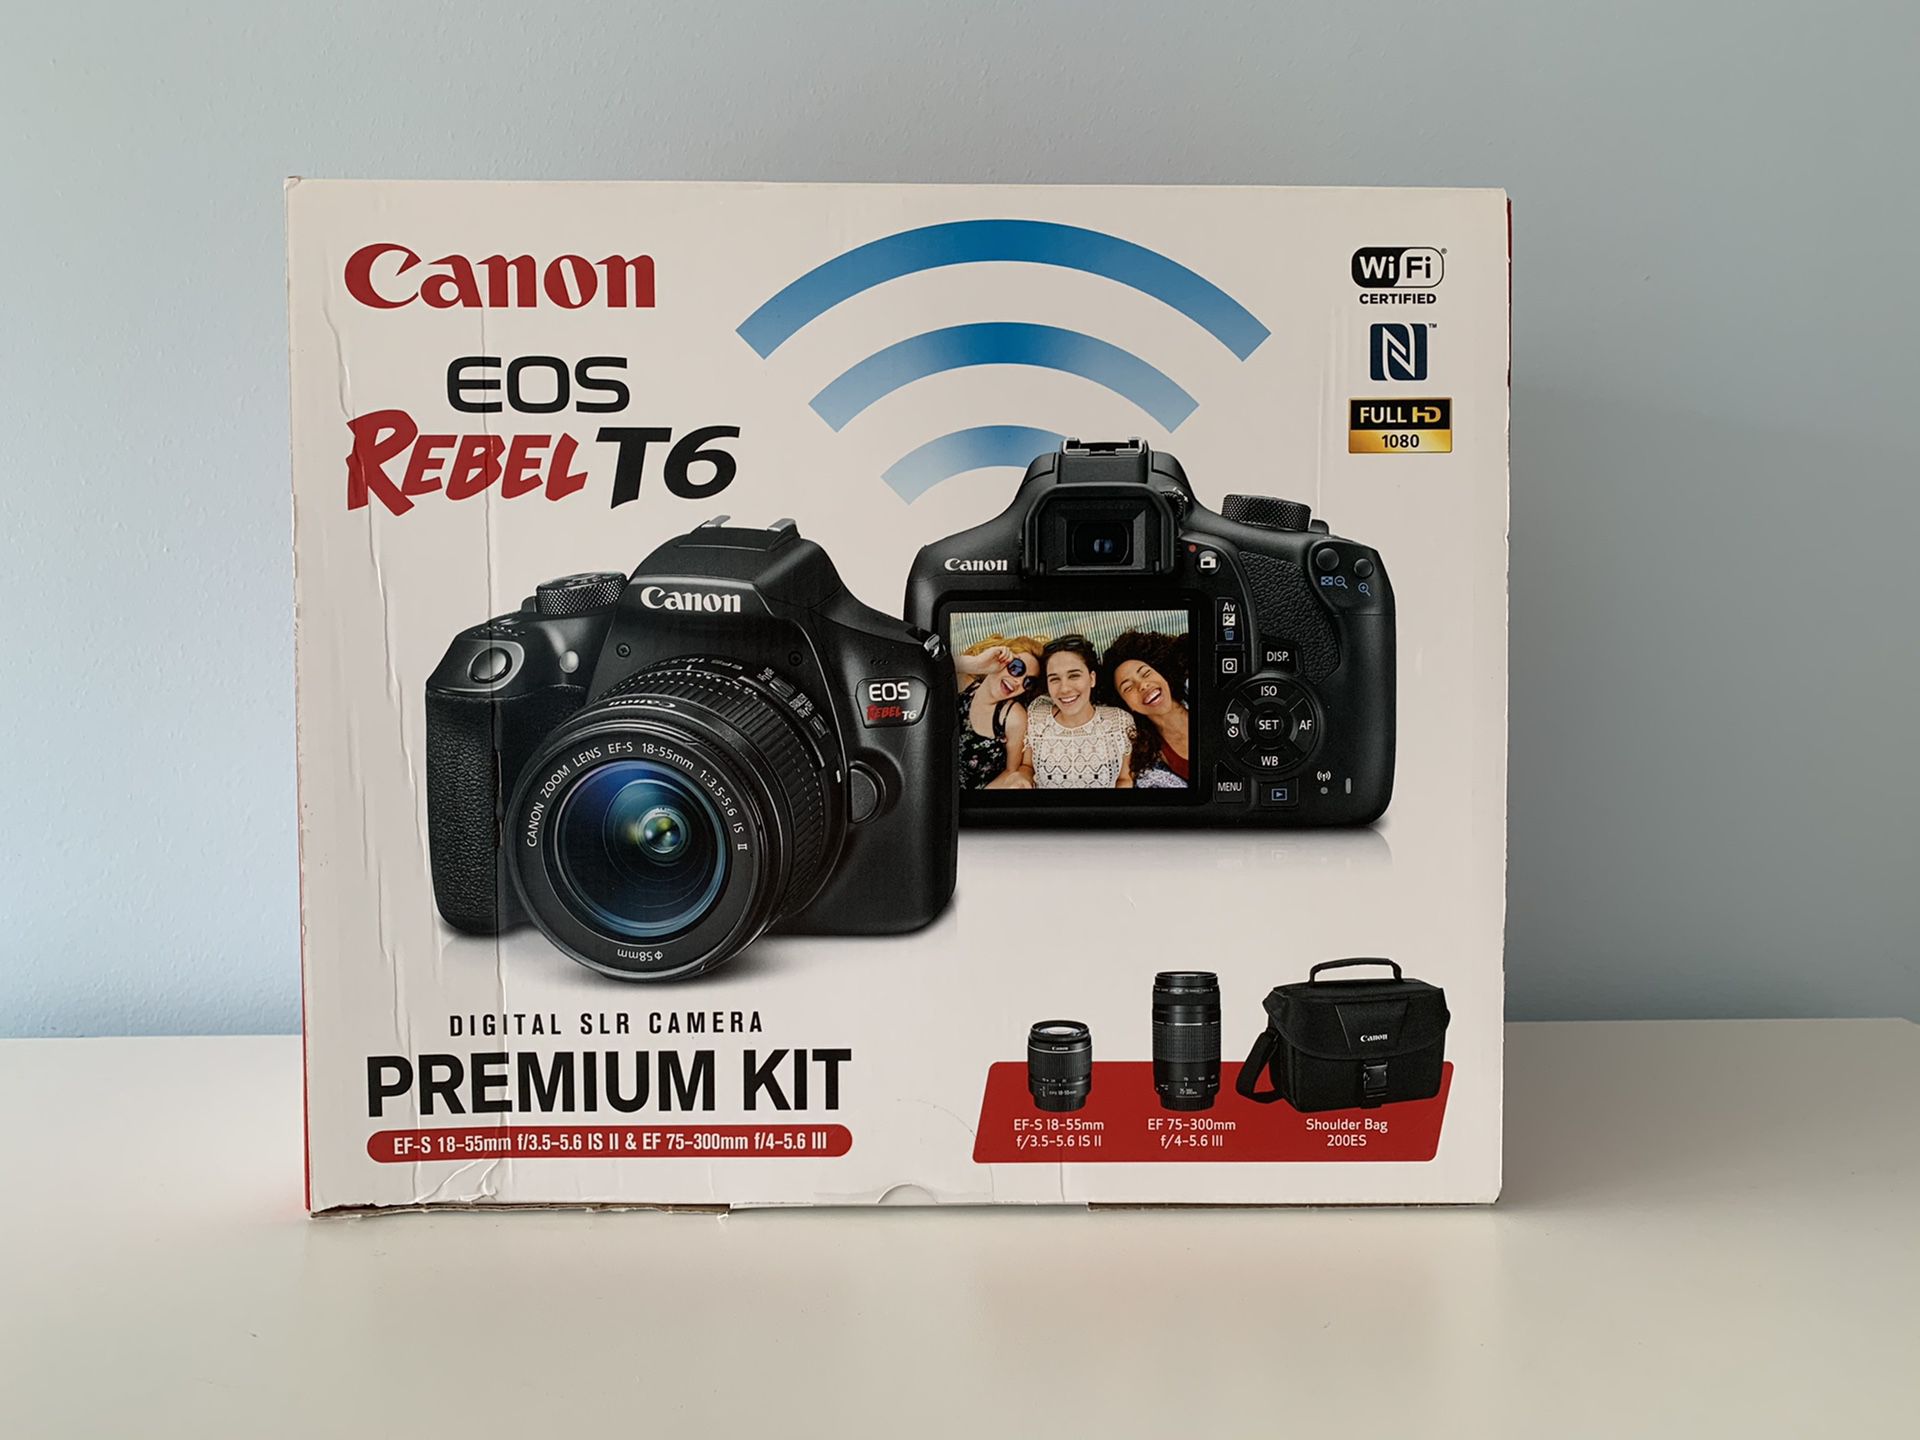 Canon EO5 Rebel T6 Premium Kit